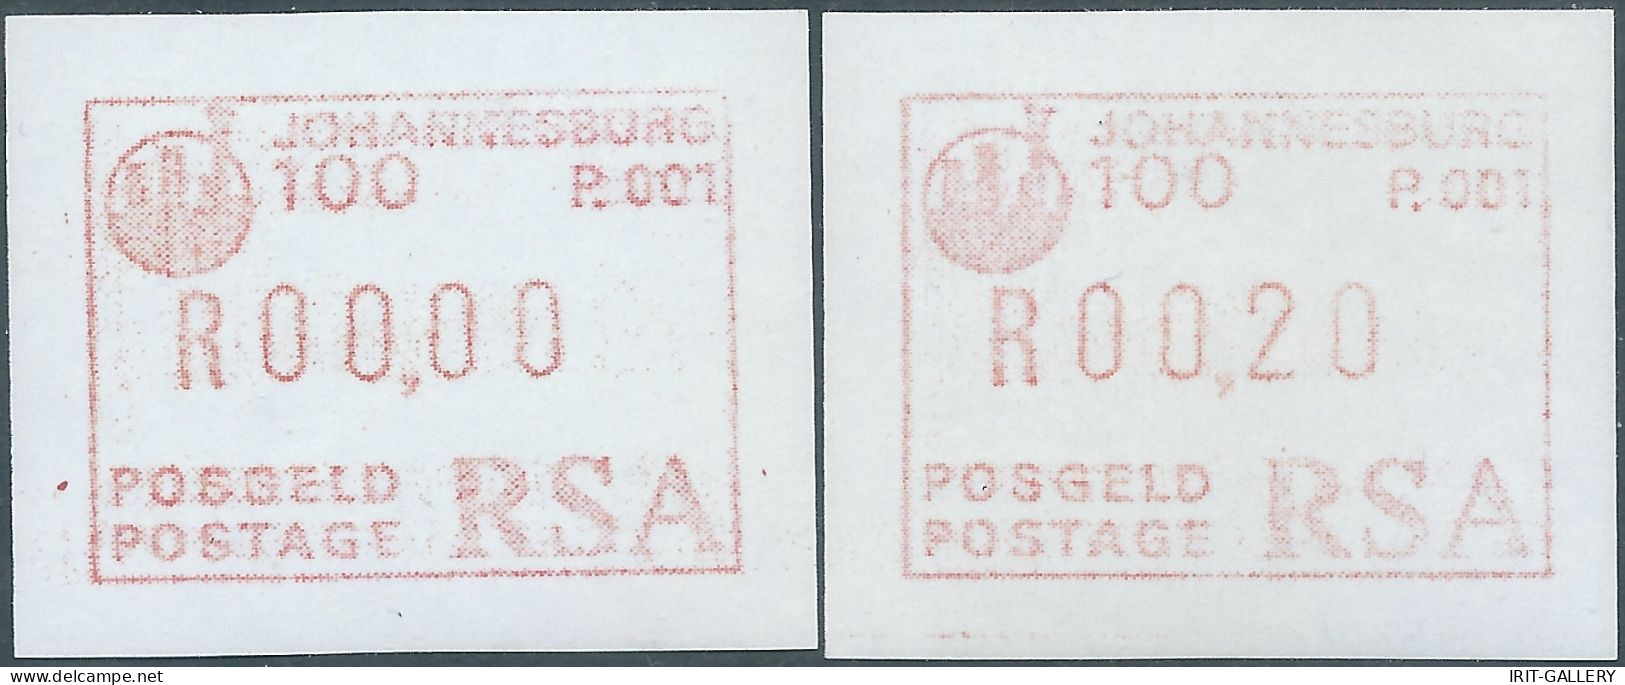 SOUTH AFRICA-AFRIQUE DU SUD-SUD AFRICA,JOHANNESBURG 1986-1987 TWO Frame Label Stamp(RSA)SIMPLE CARD,MNH - Nuevos